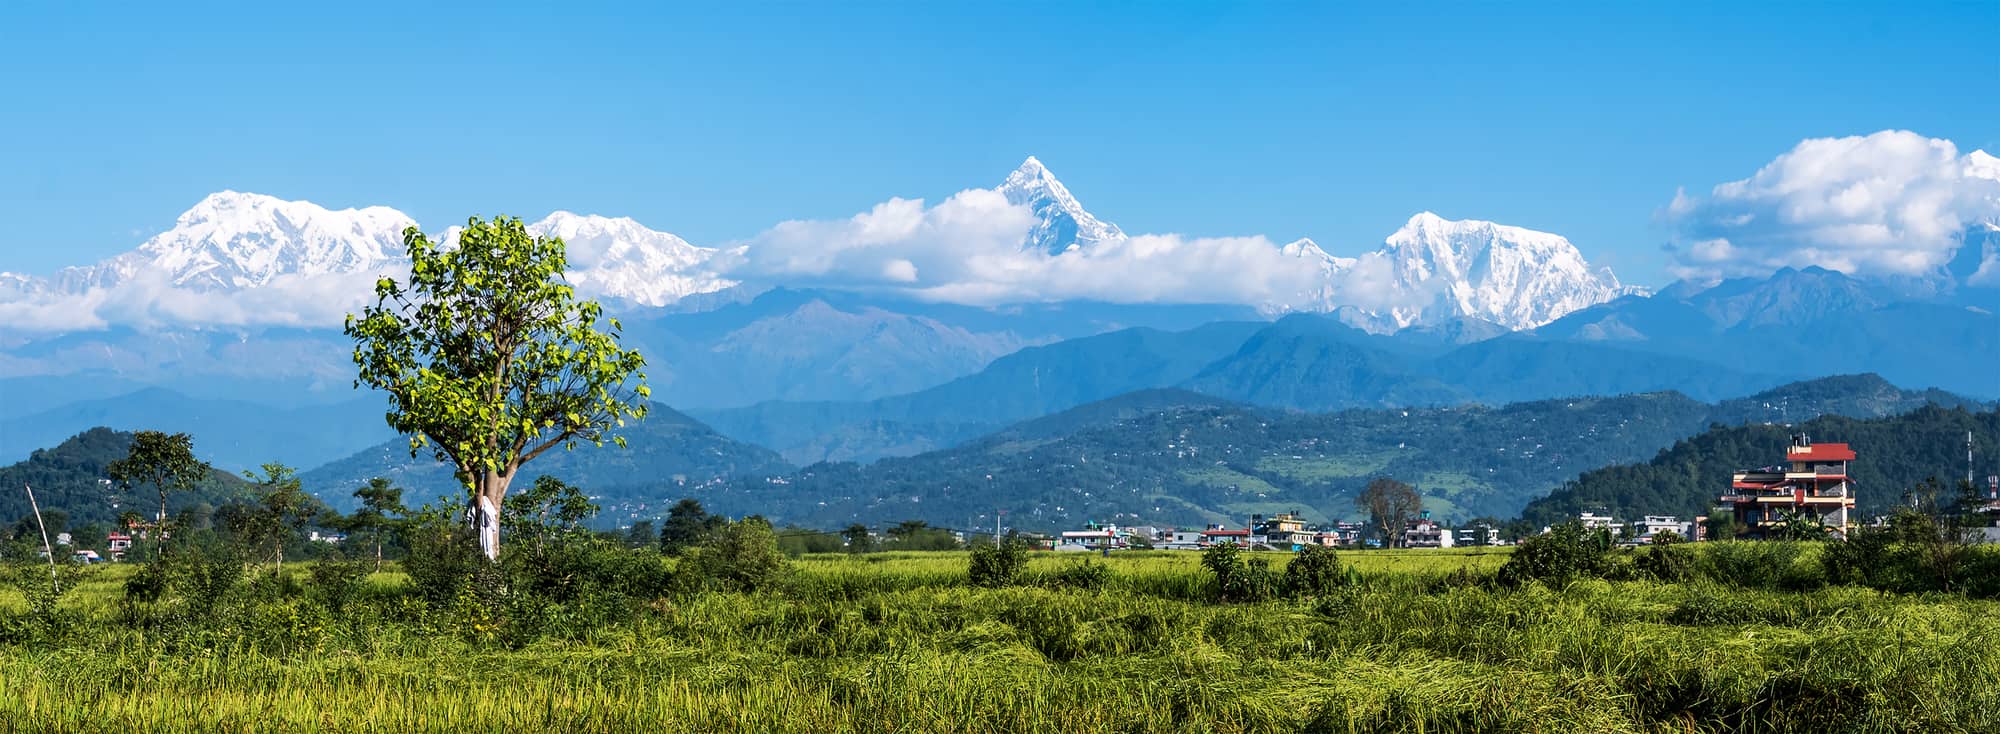 Bergpanorama auf das Annapurna-Gebirge